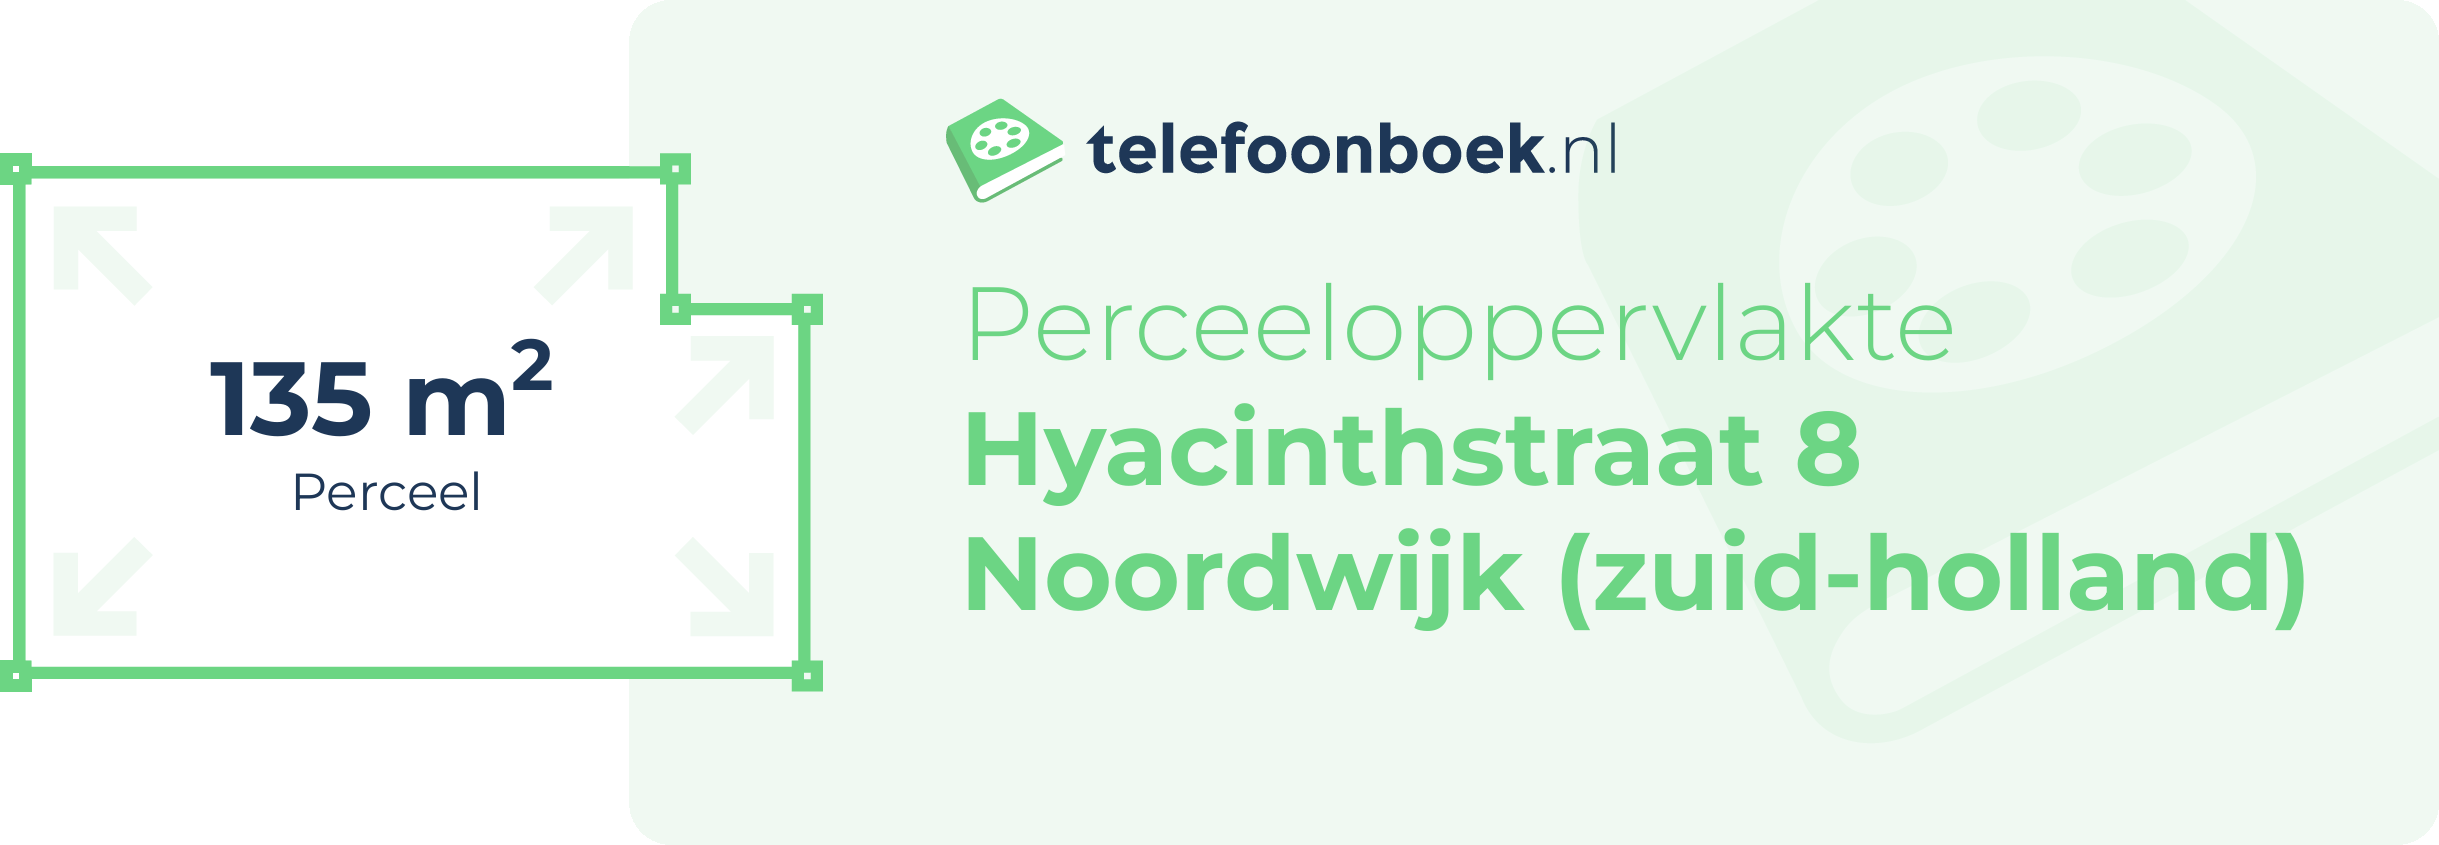 Perceeloppervlakte Hyacinthstraat 8 Noordwijk (Zuid-Holland)